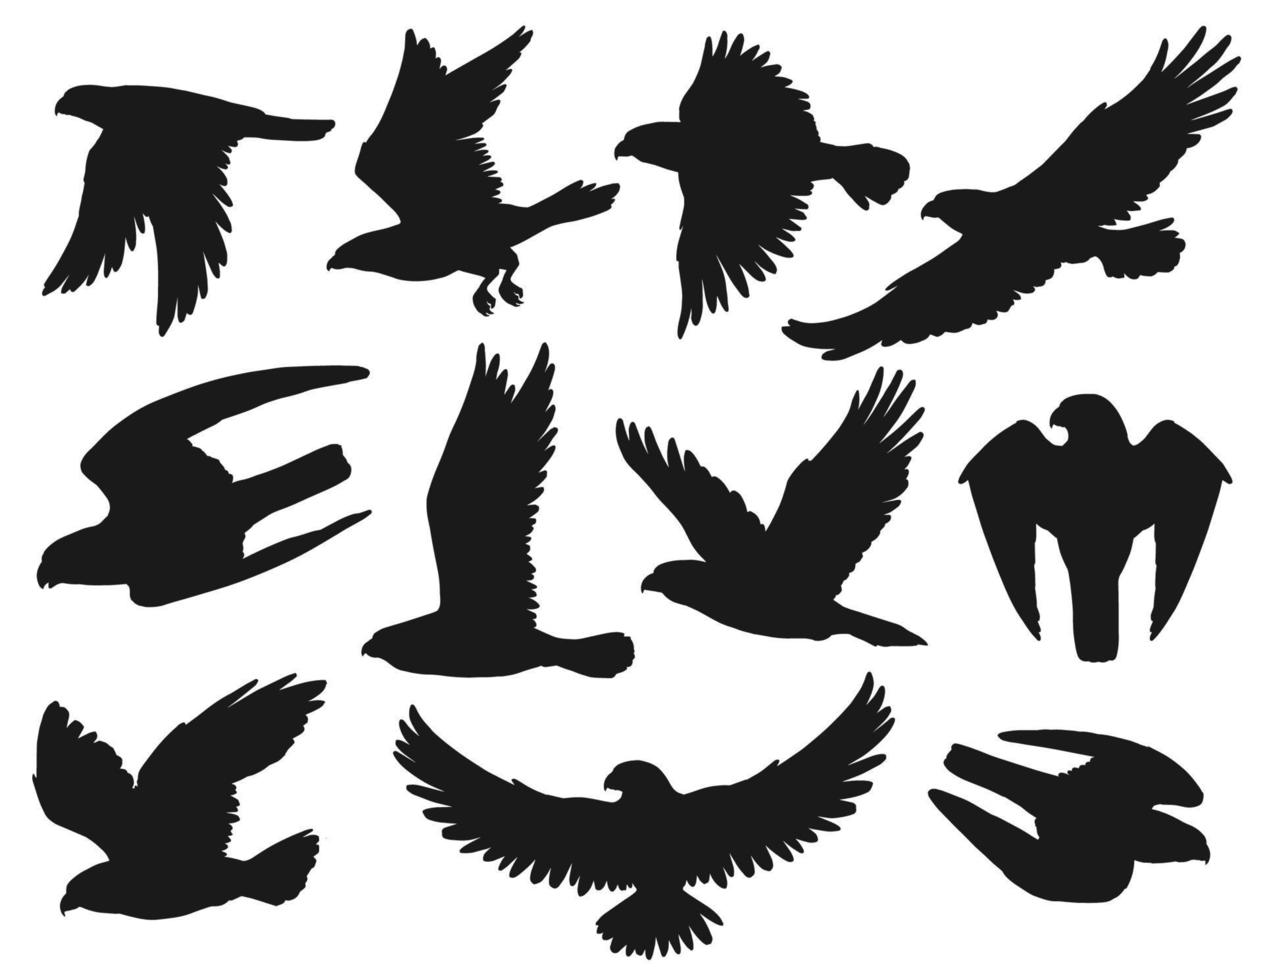 Adler und Falken schwarze Silhouetten, Vektorvögel vektor